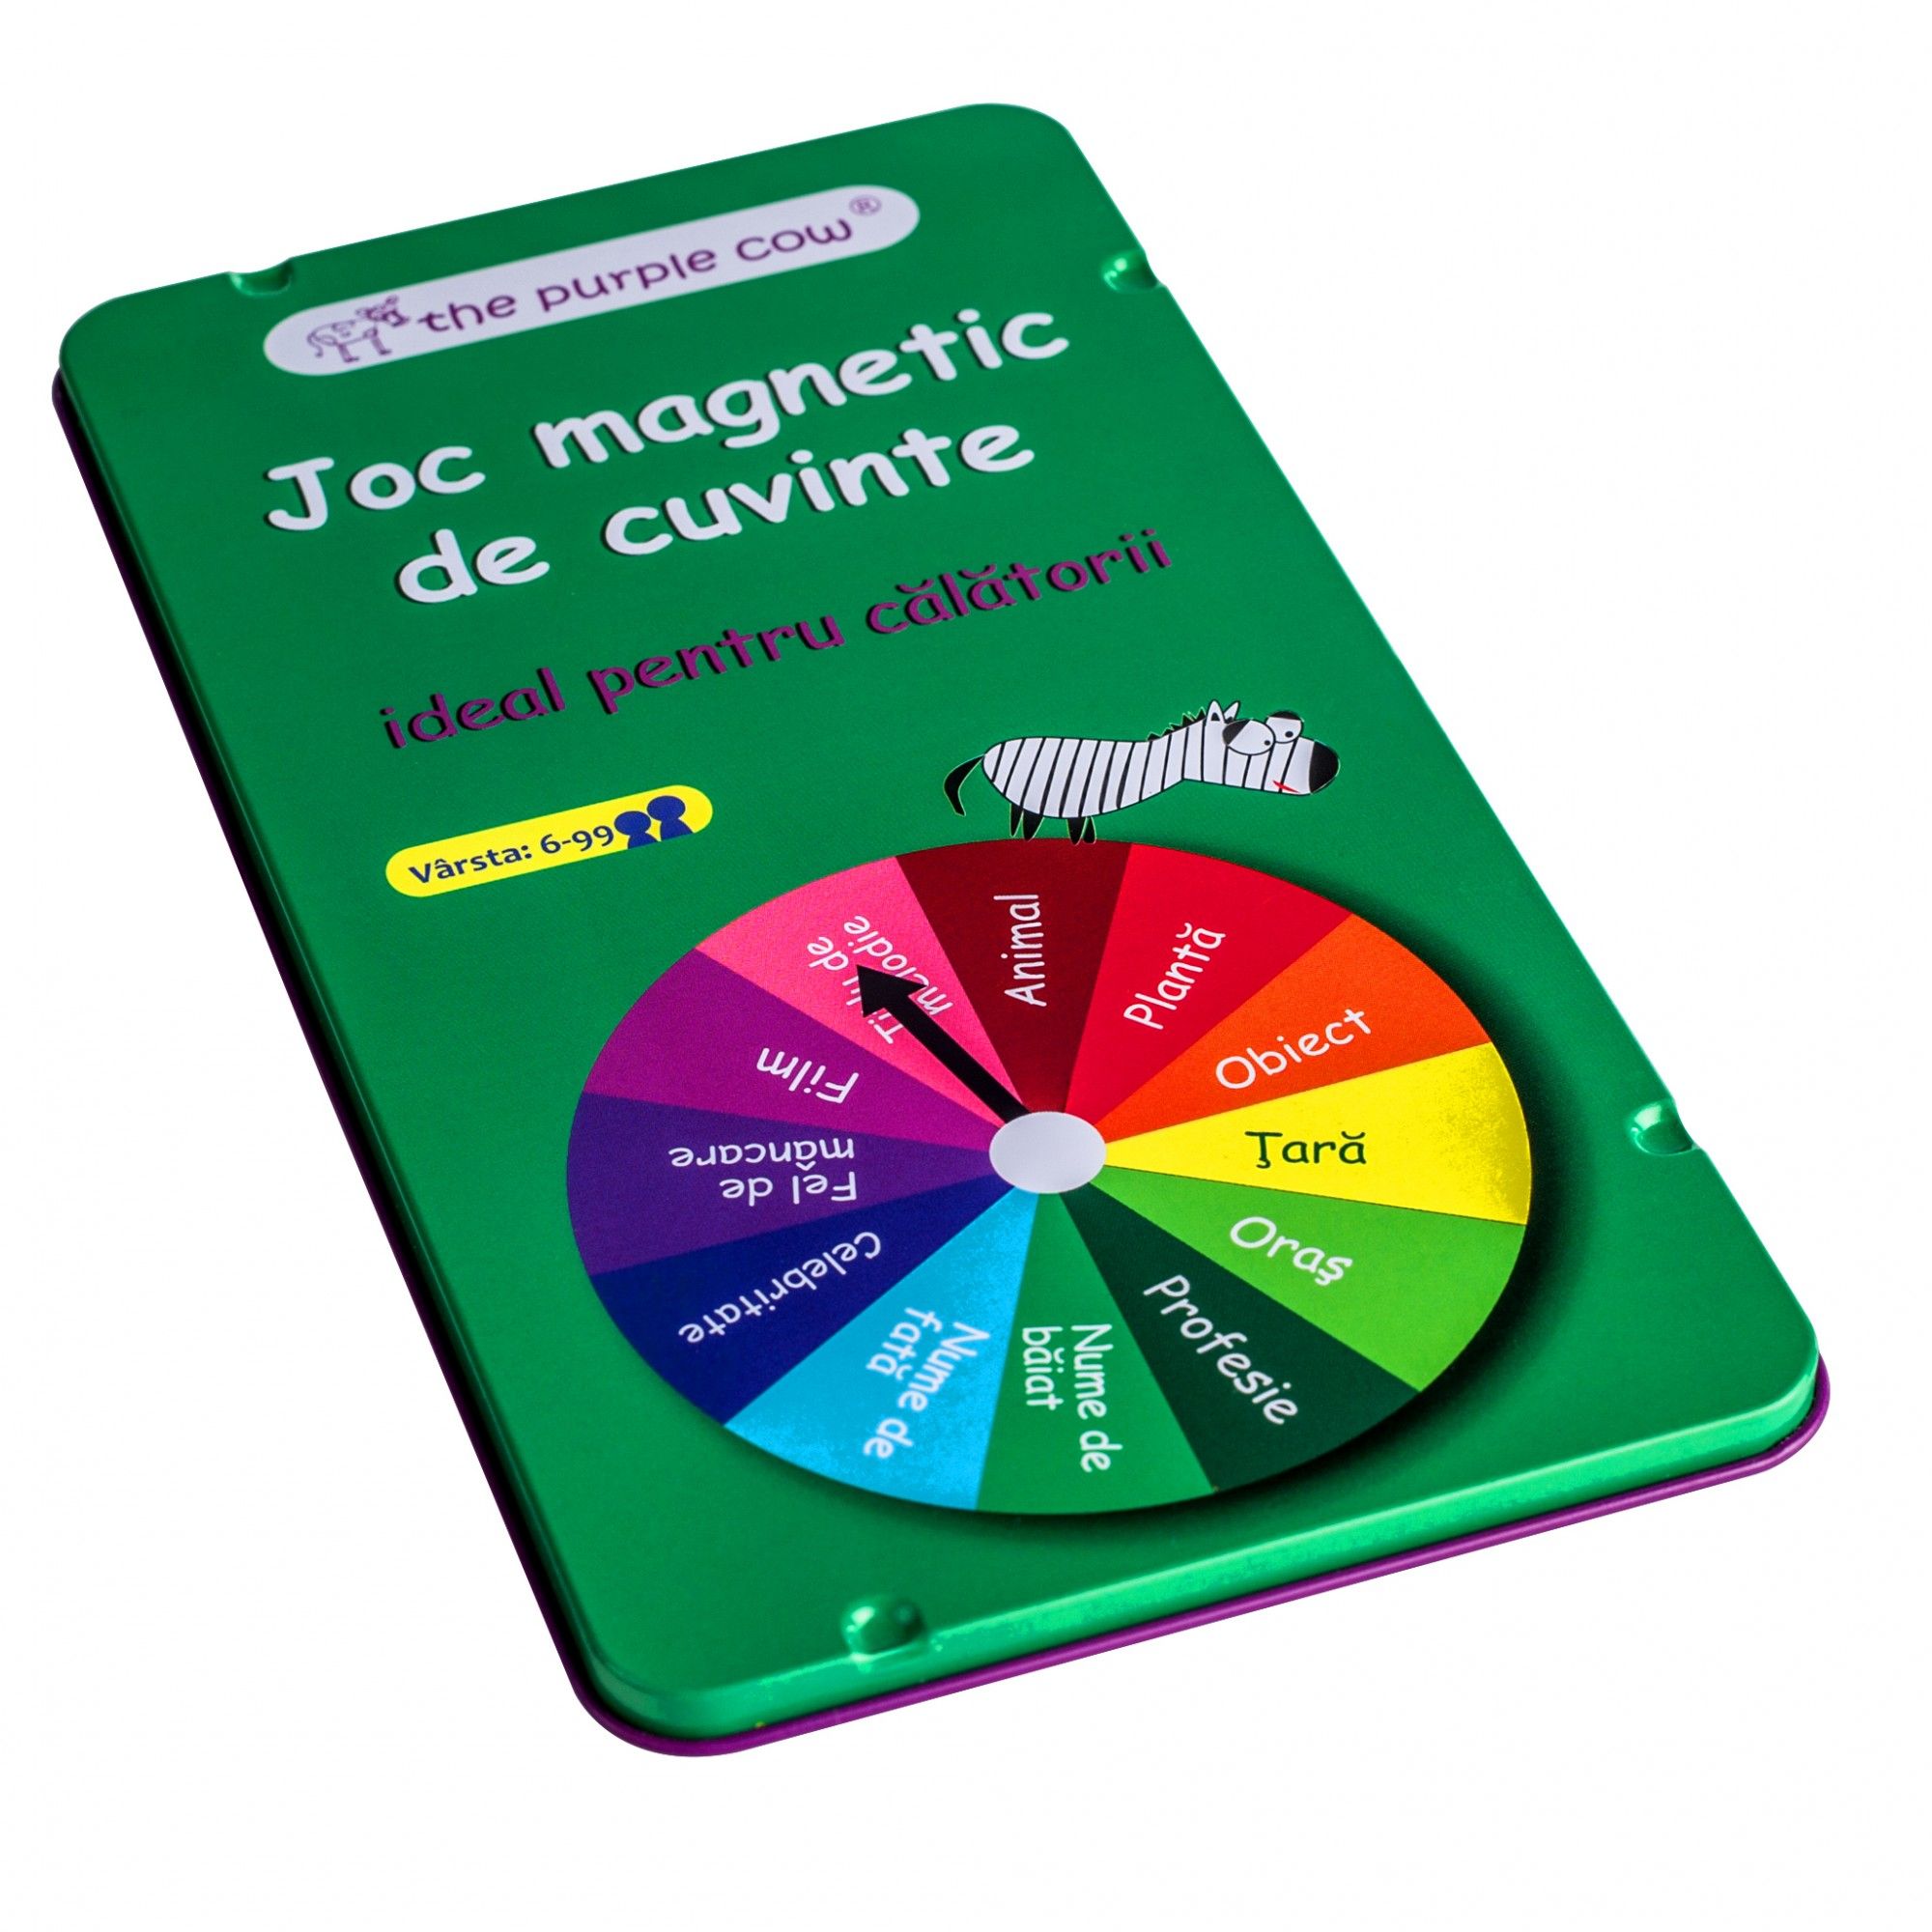 Joc magnetic – Cuvinte